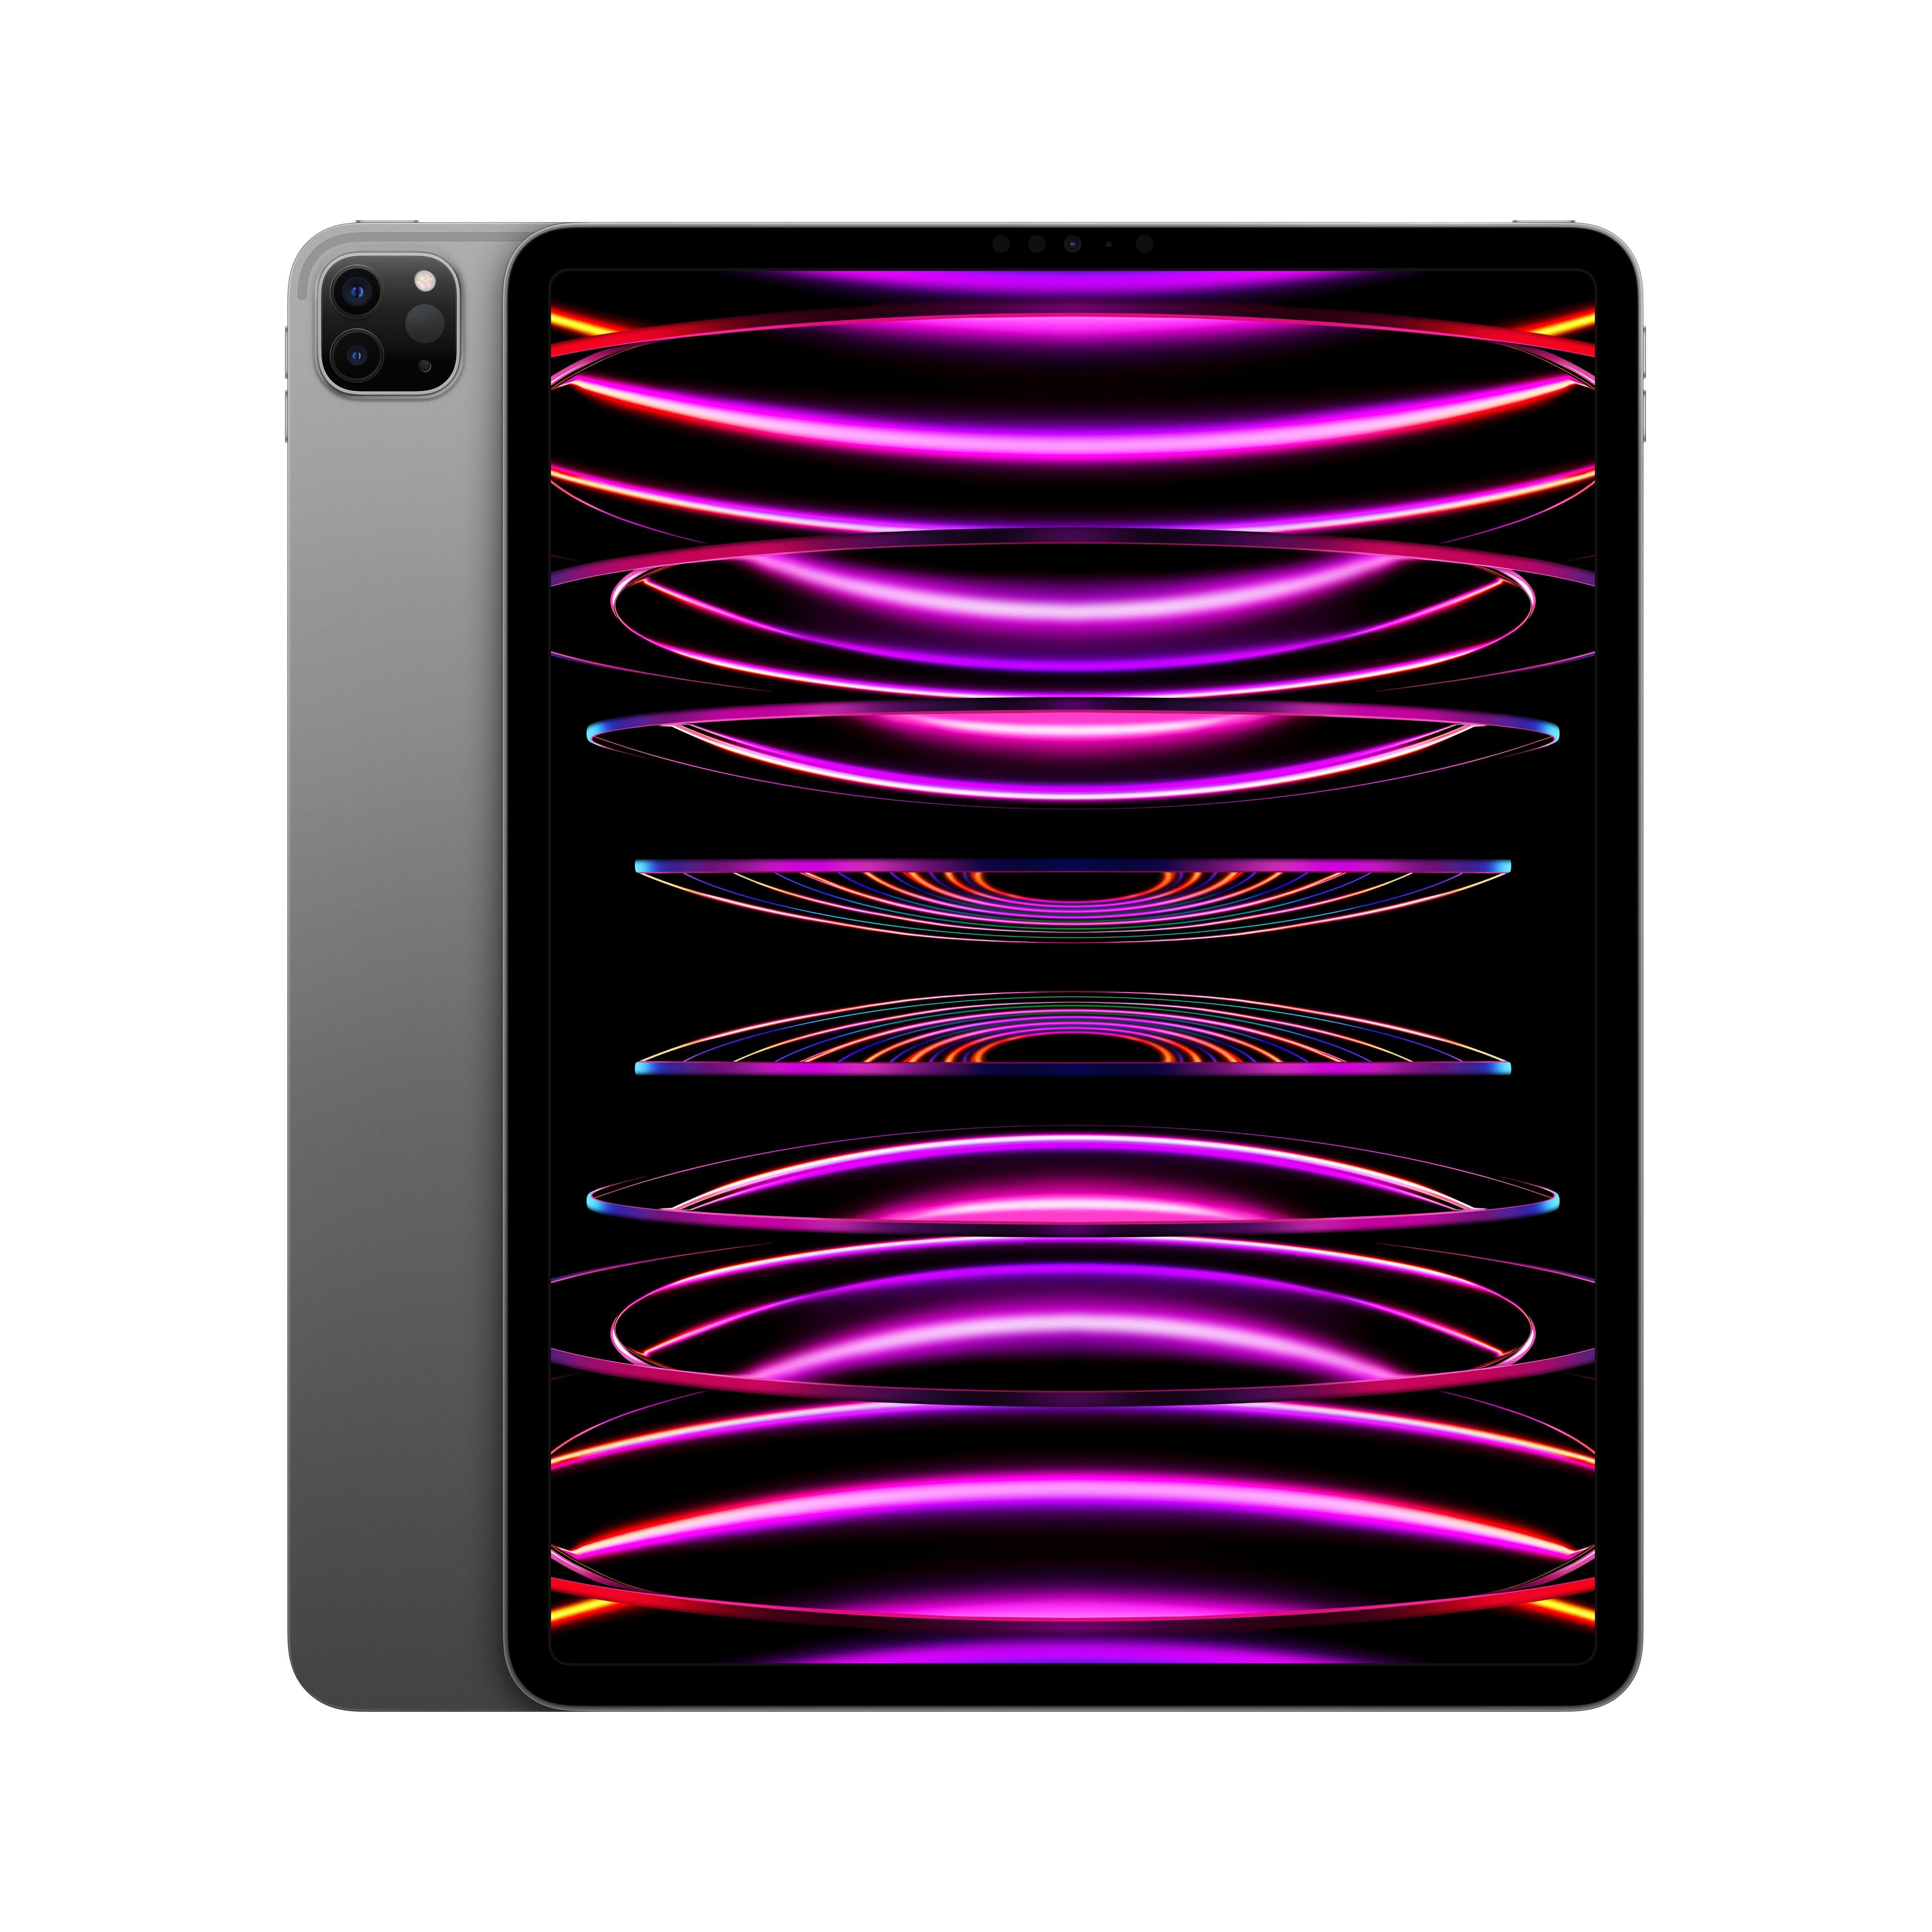 2022 12.9-inch iPad Pro Wi-Fi 256GB - Space Grey (6th generation 